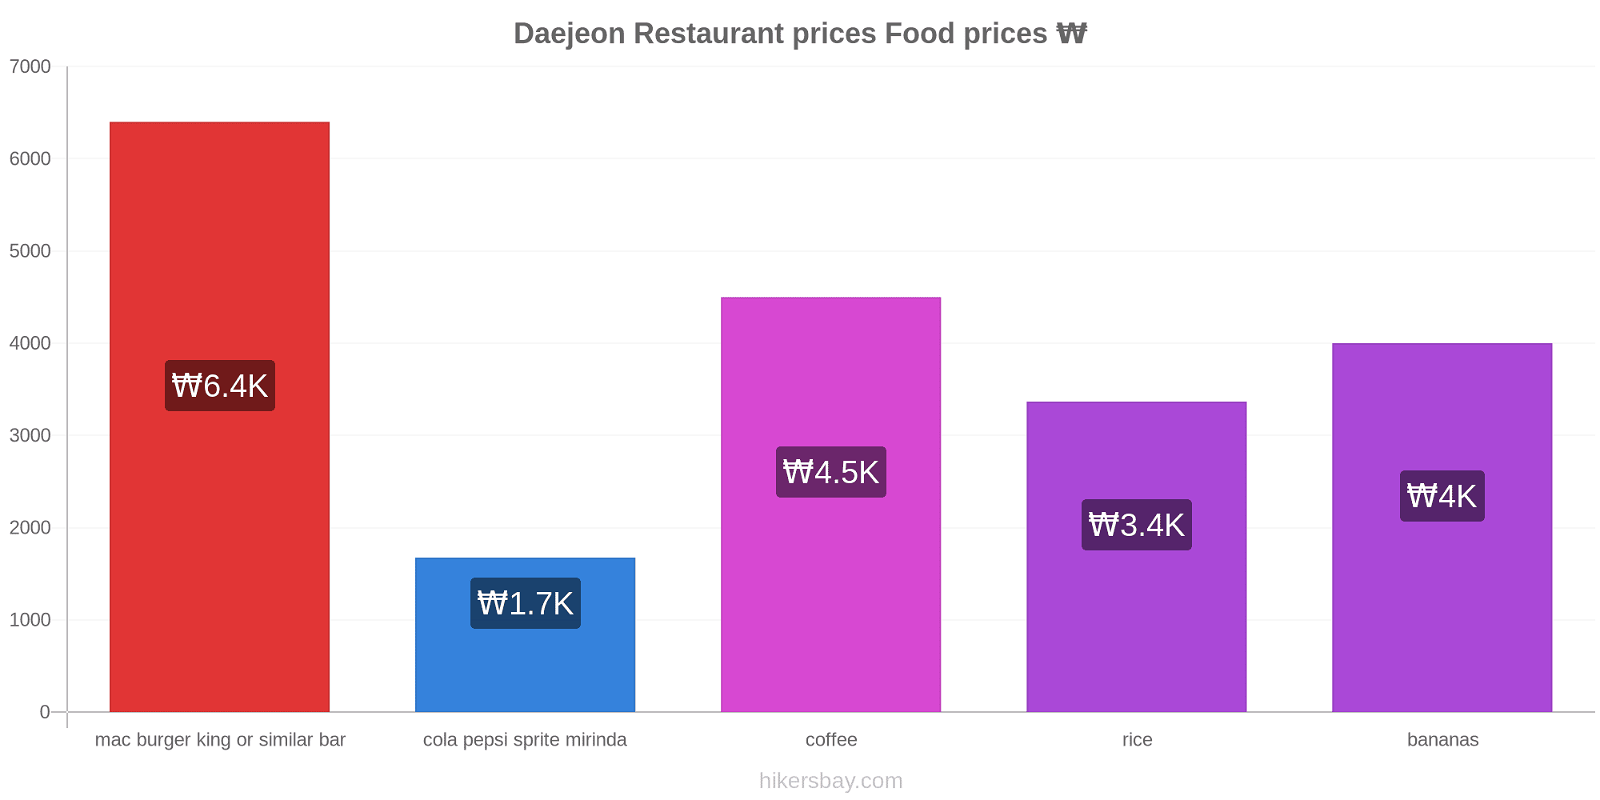 Daejeon price changes hikersbay.com